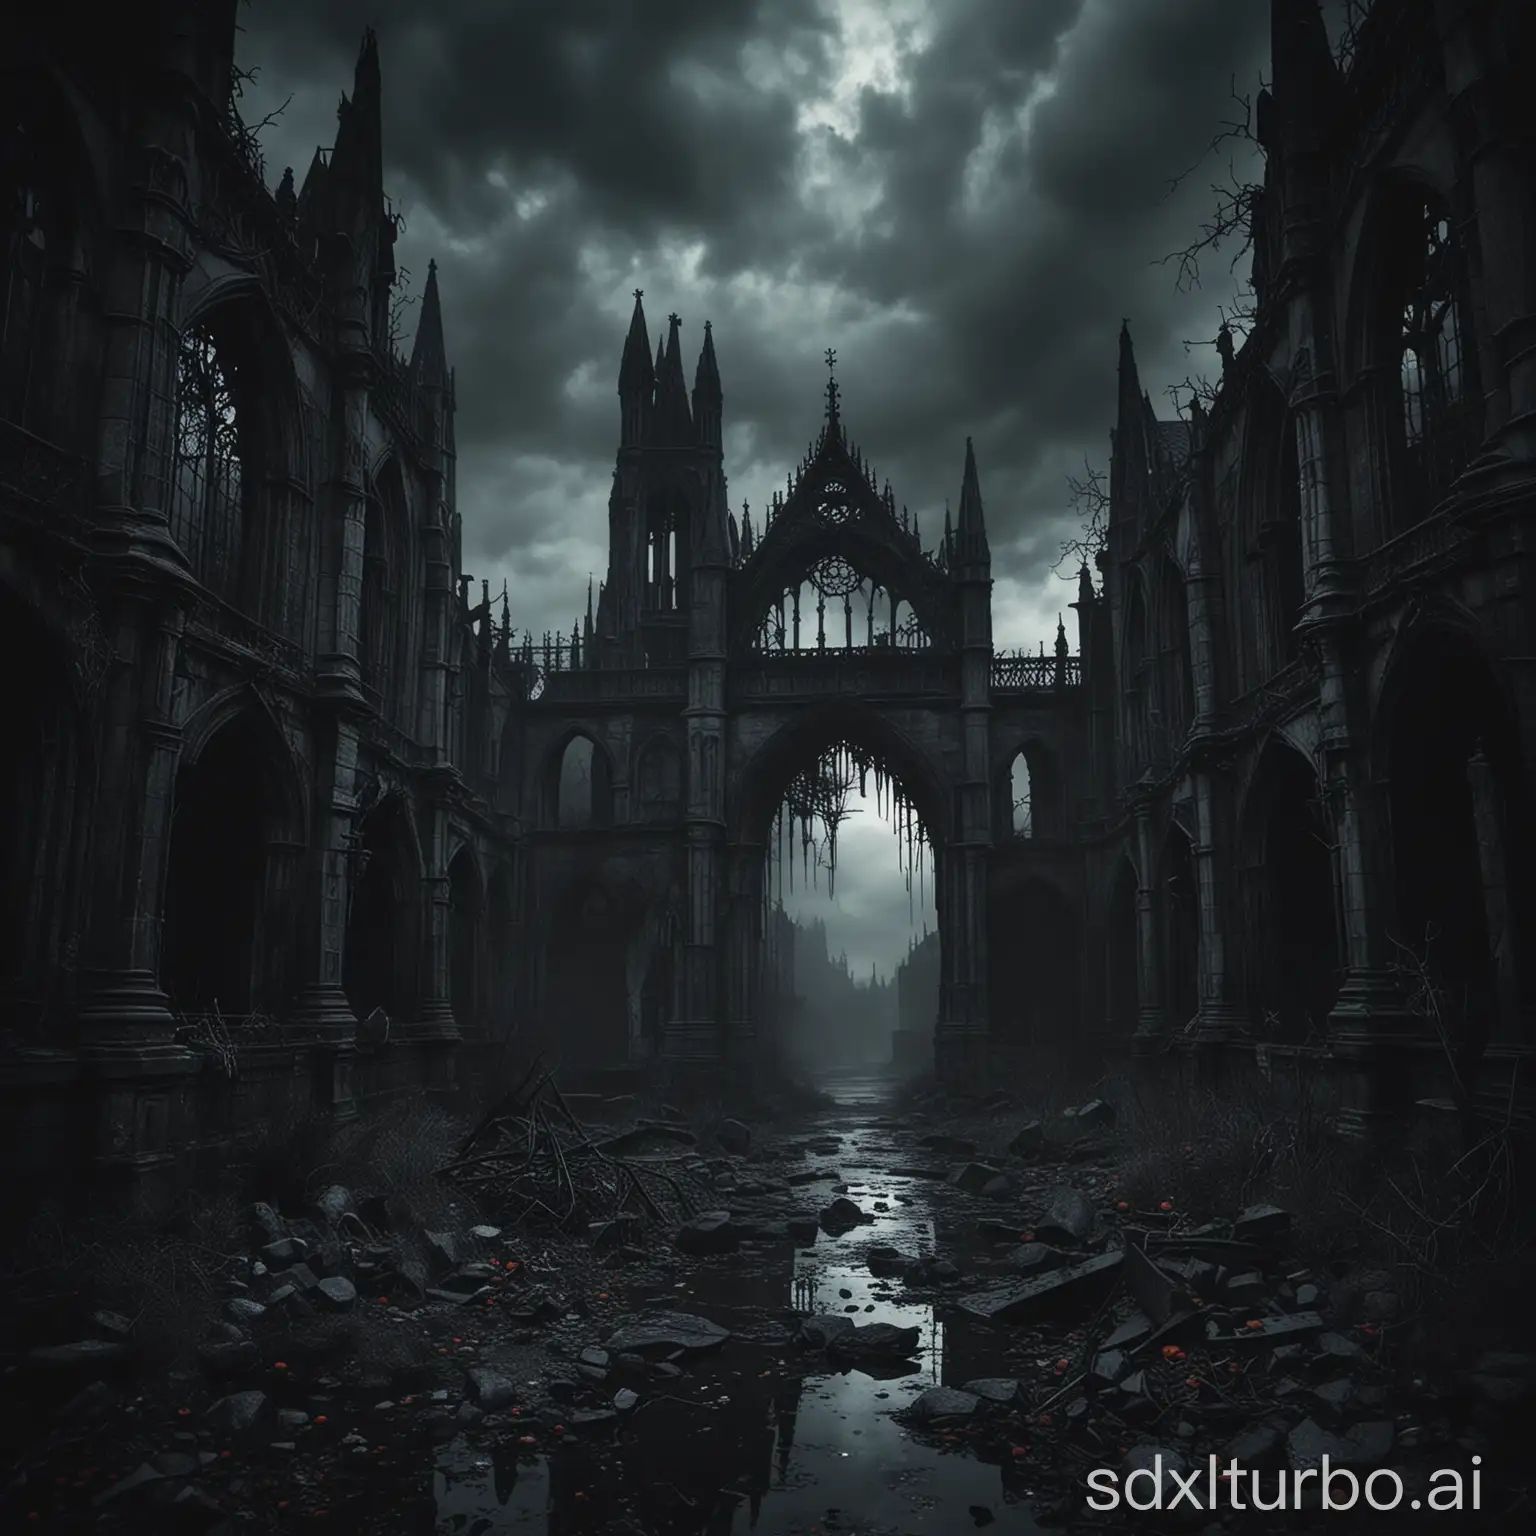 A dark gothic scenery